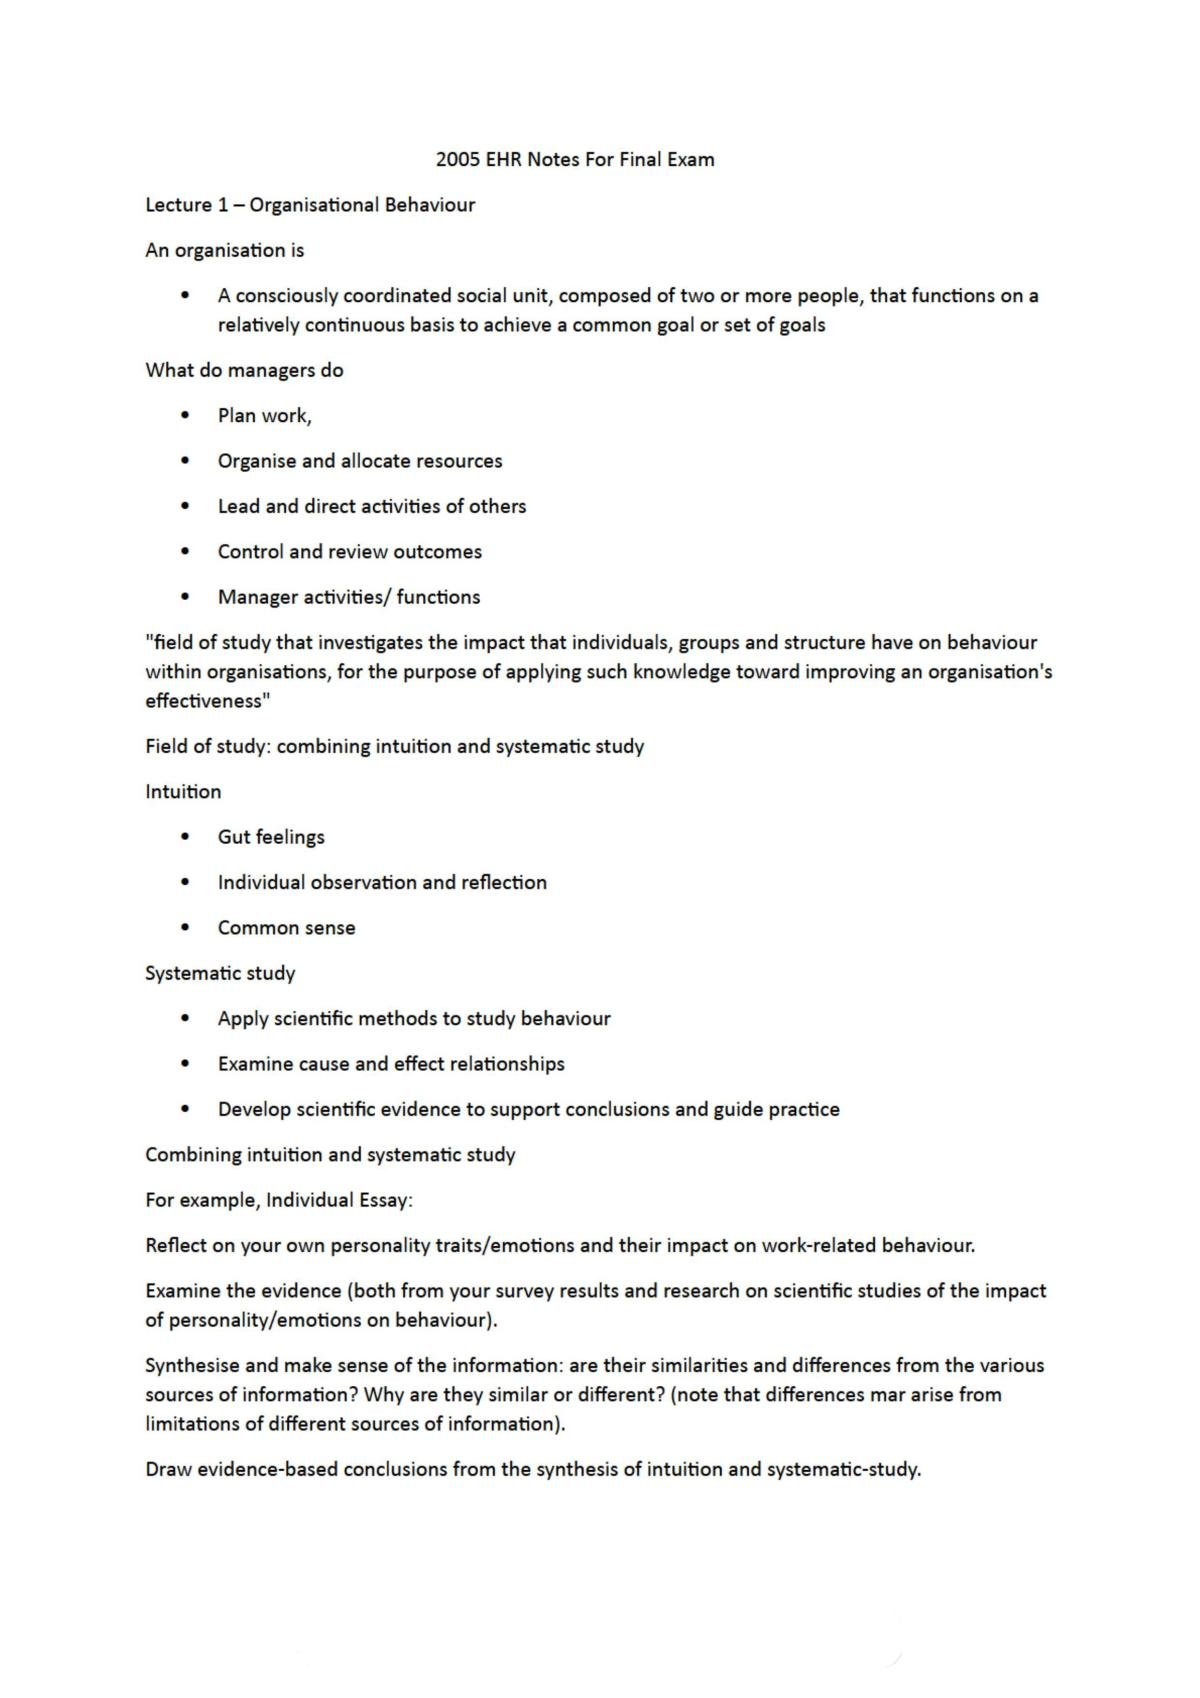 Organisational Behaviour Notes - Page 1